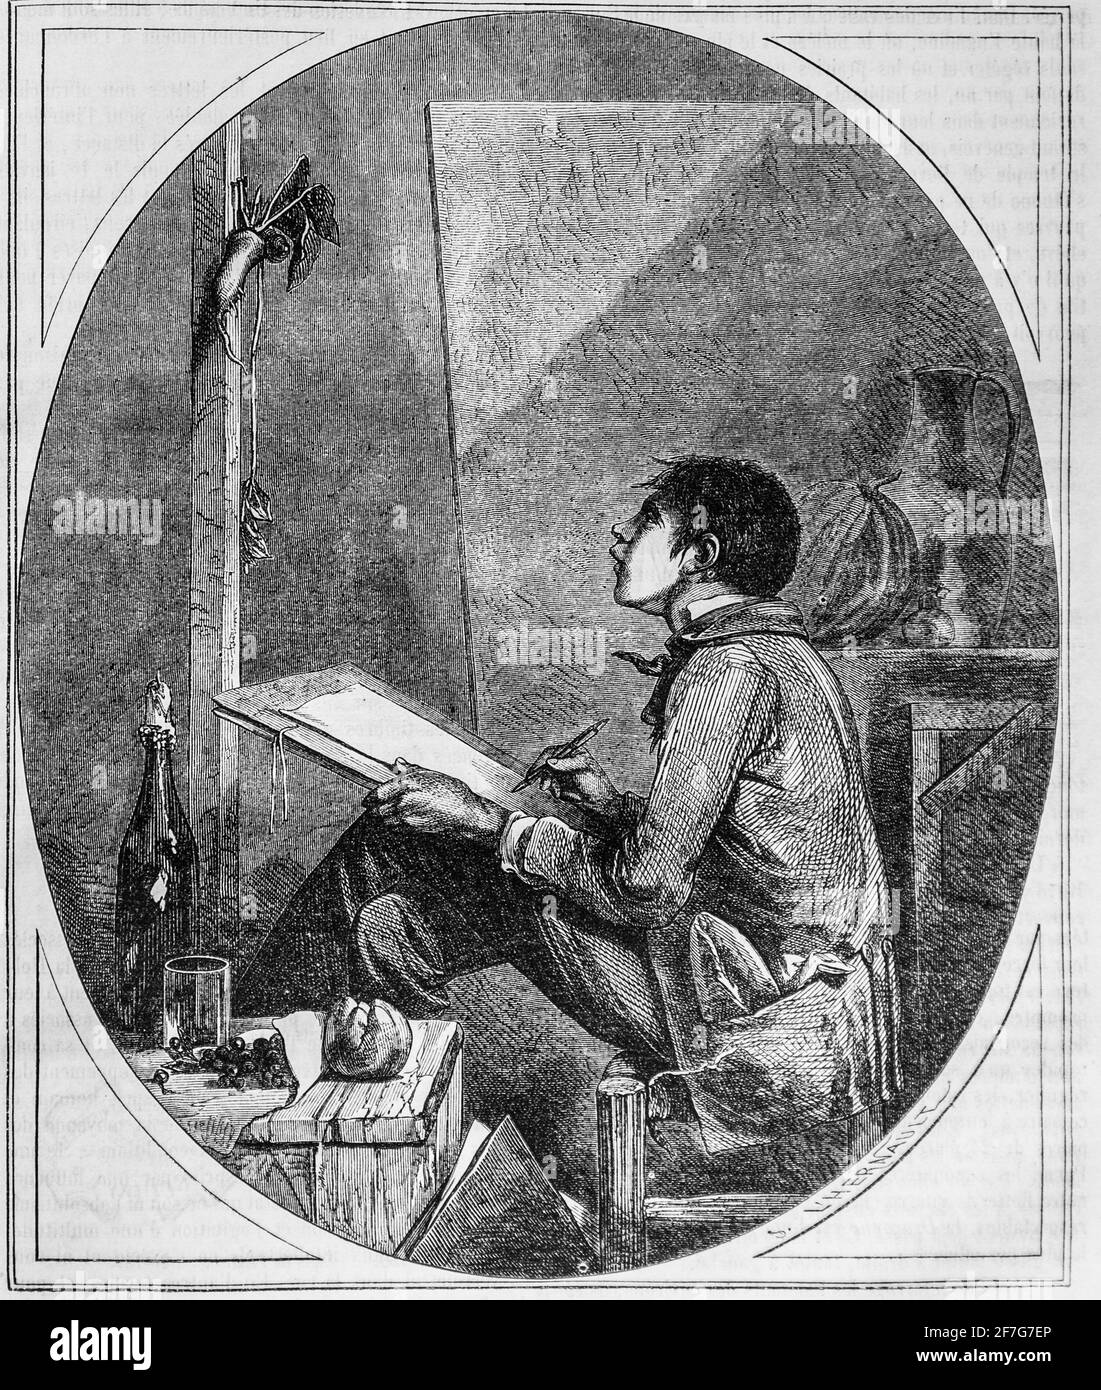 le future peintre de nature morte ,le Magazine pitoresque par edouard charton,1870 Stockfoto